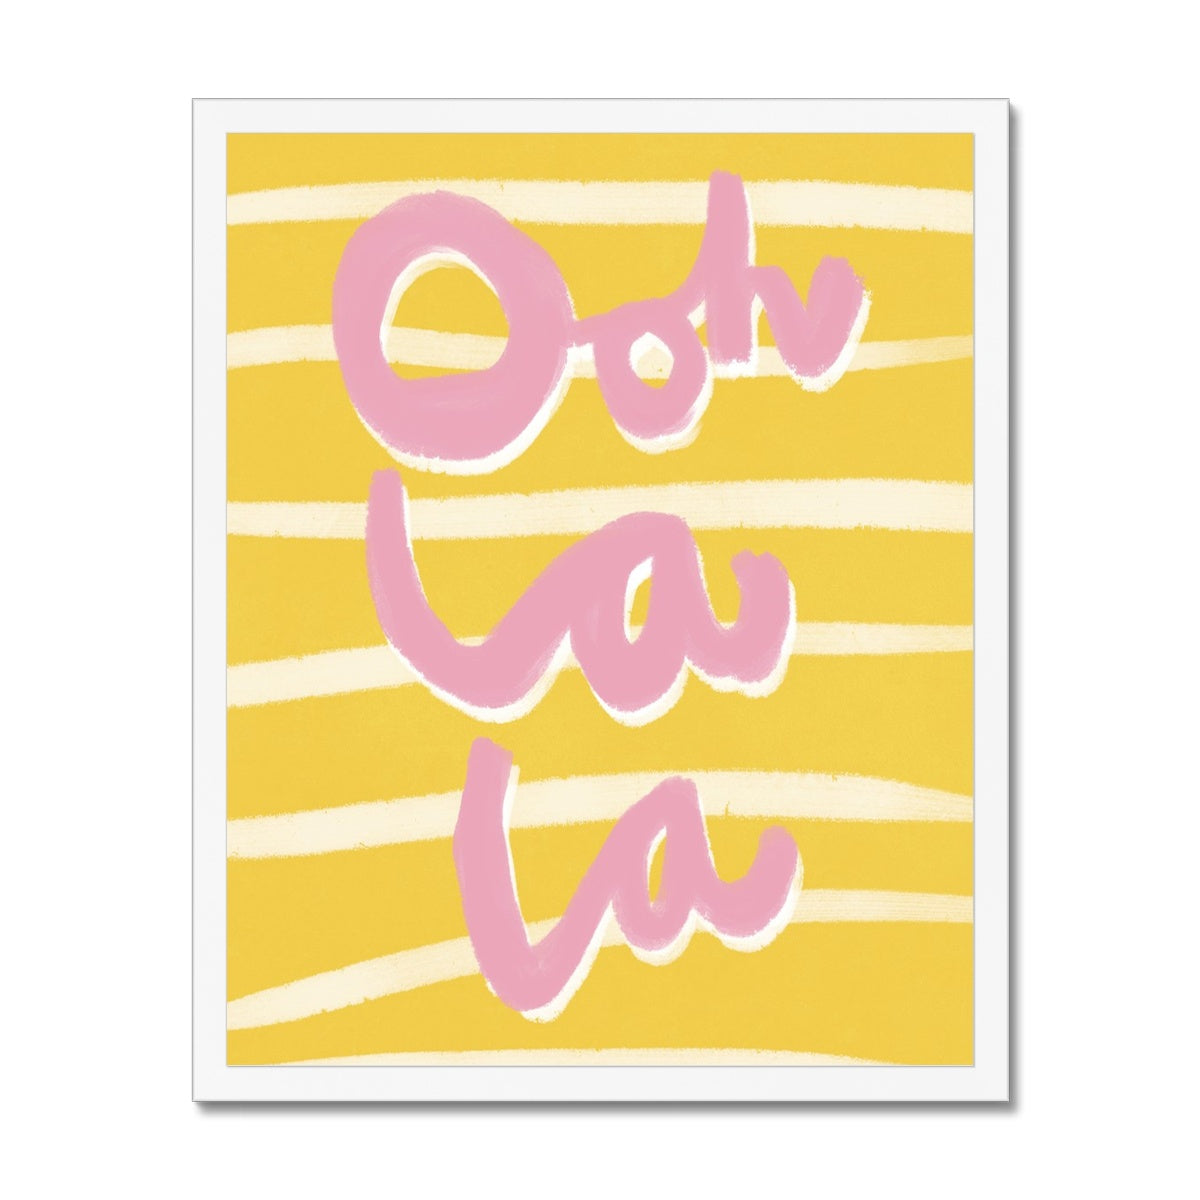 Ooh La La Art Print - Yellow, White and Pink Framed Print